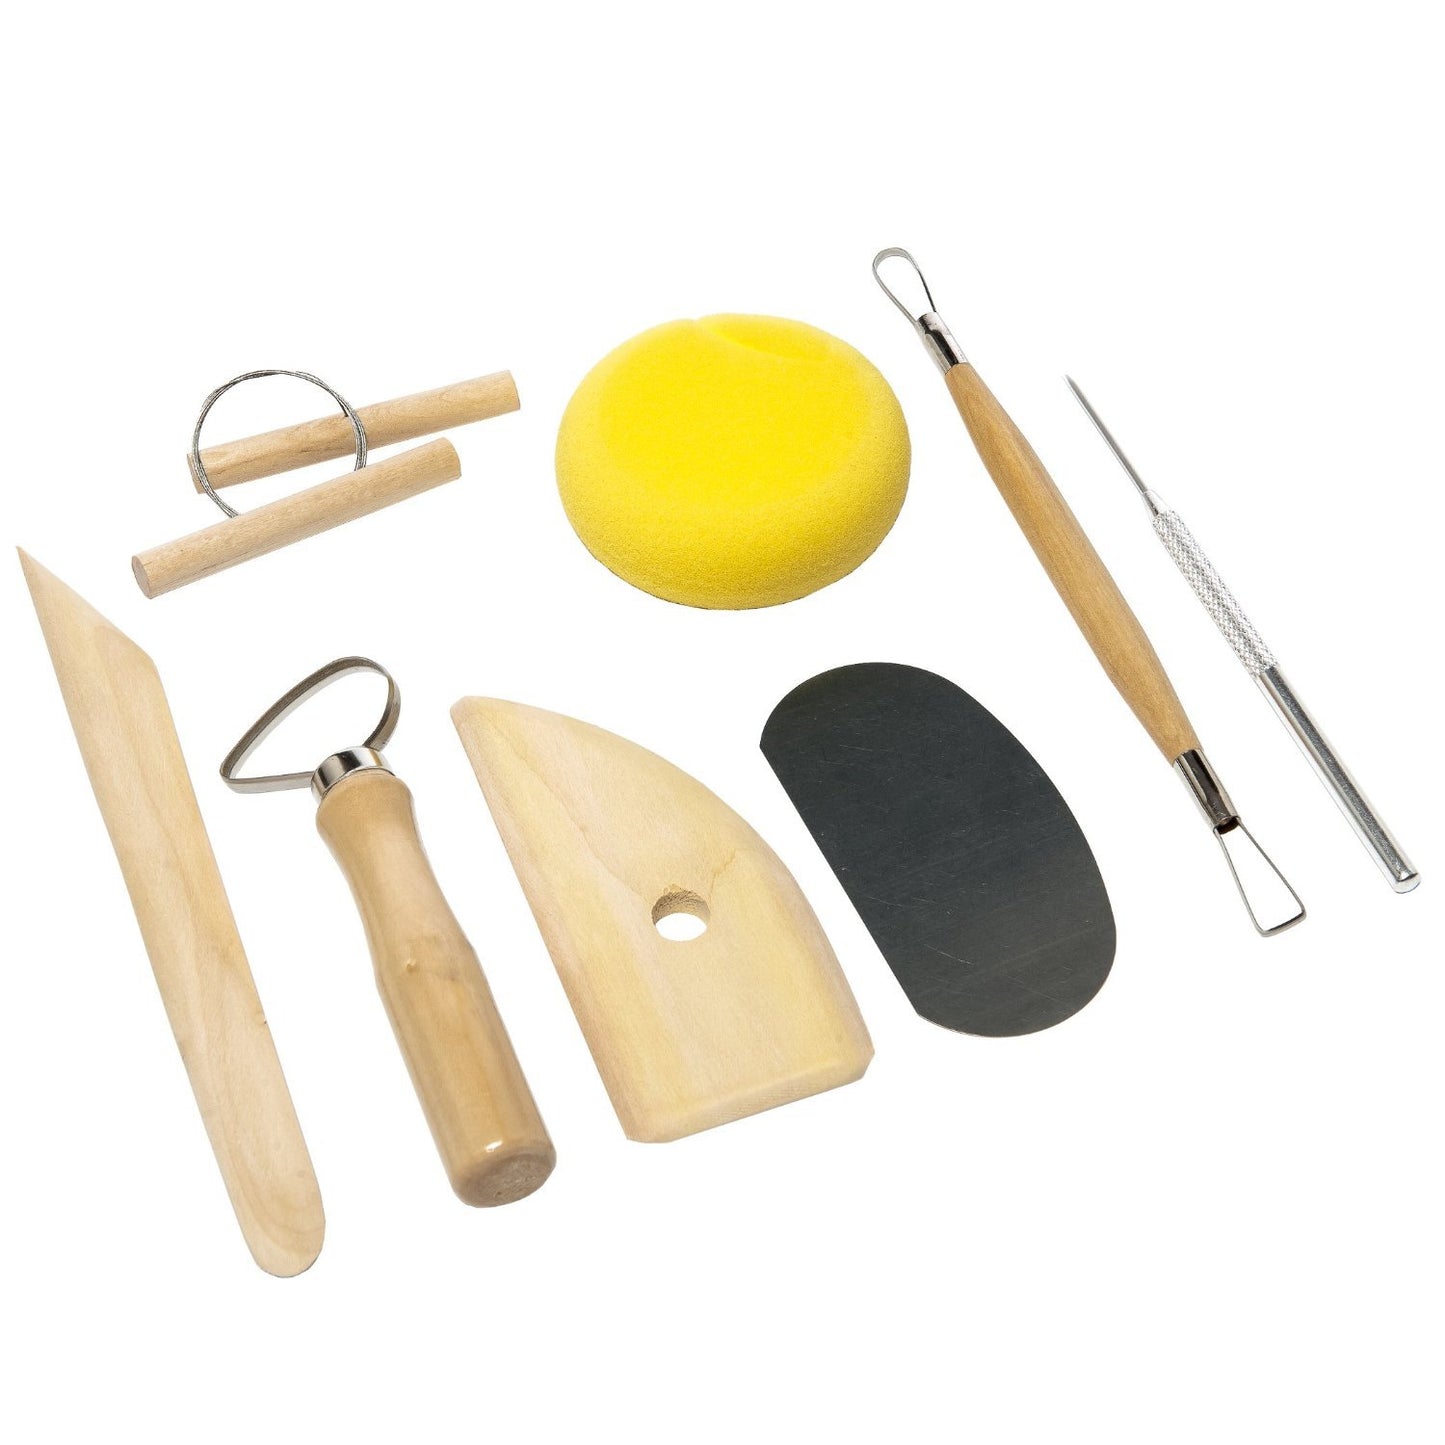 Pottery Tool Kit - Basic Set of 8